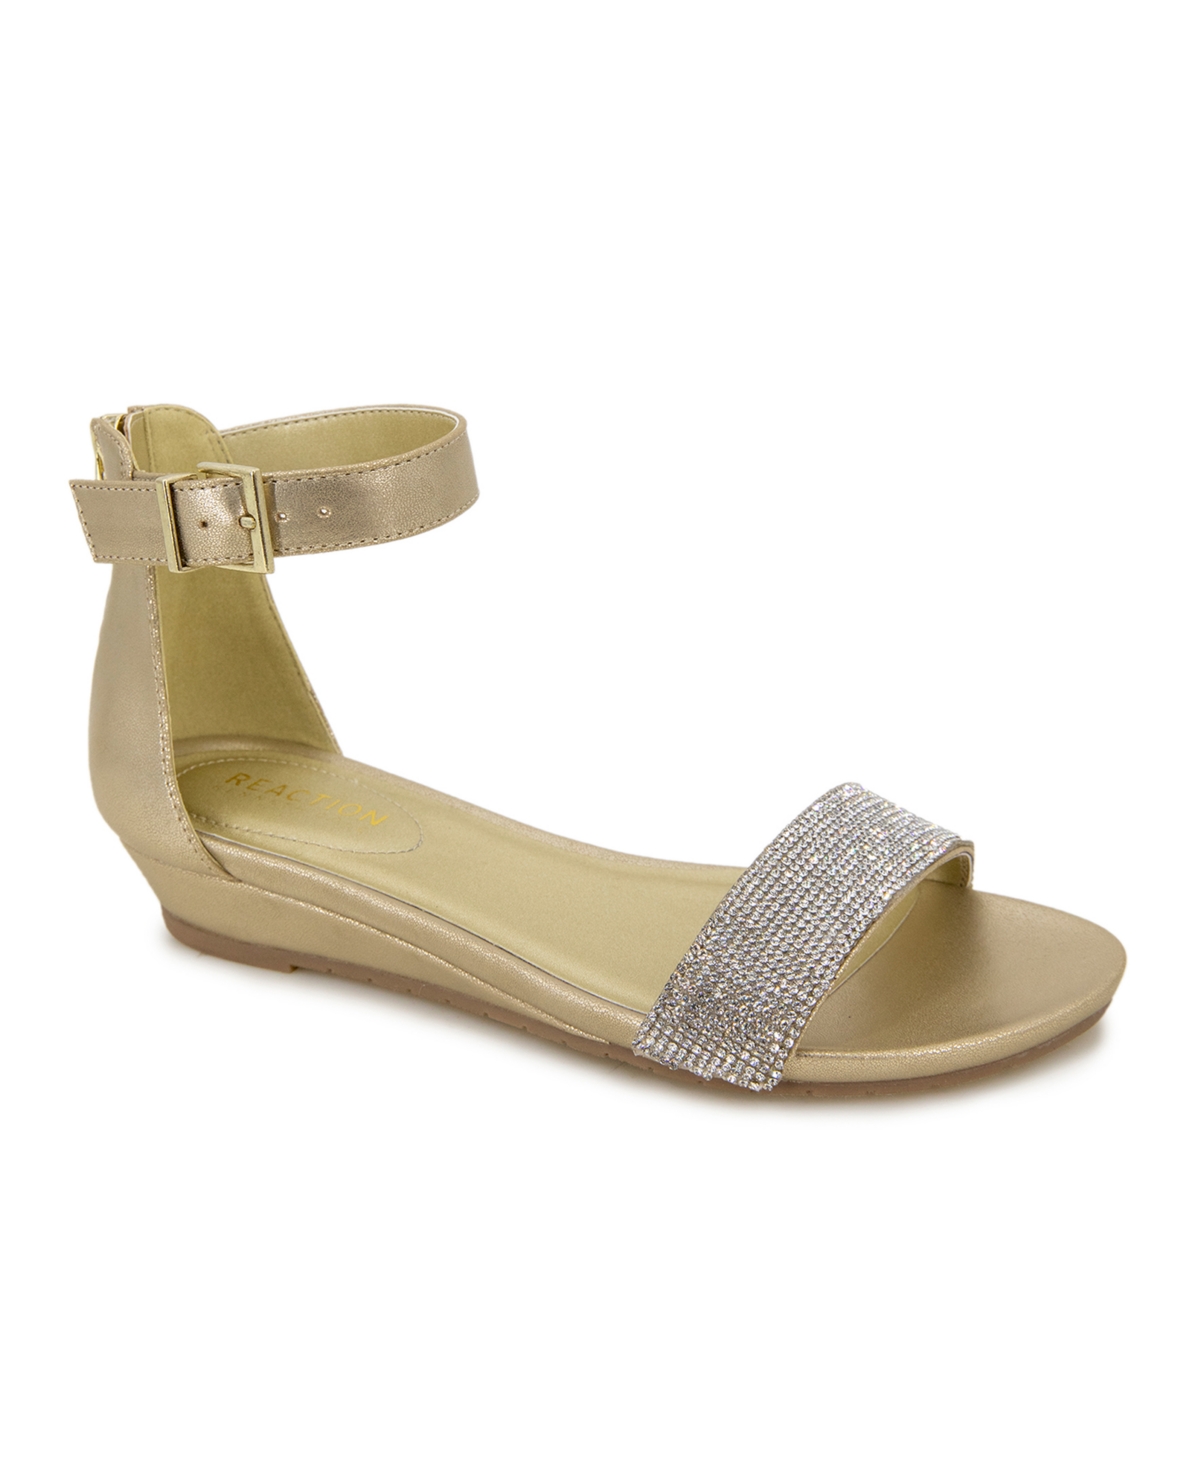 Women's Great Viber Jewel Wedge Sandals - Soft Gold